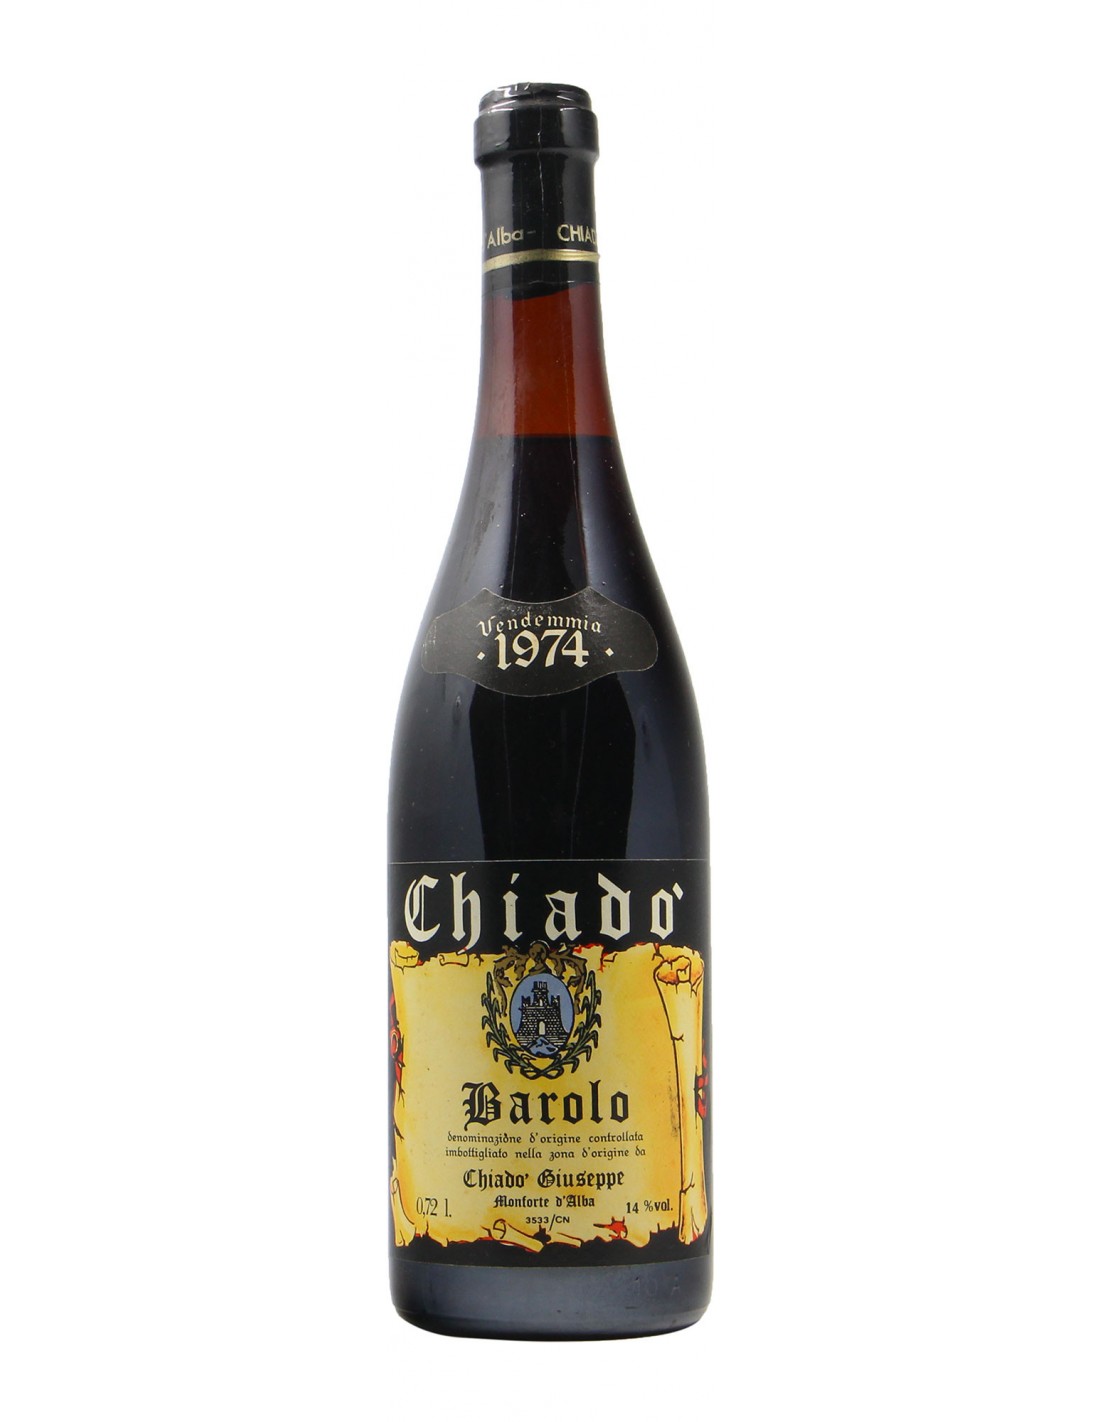 BAROLO 1974 CHIADO' Grandi Bottiglie